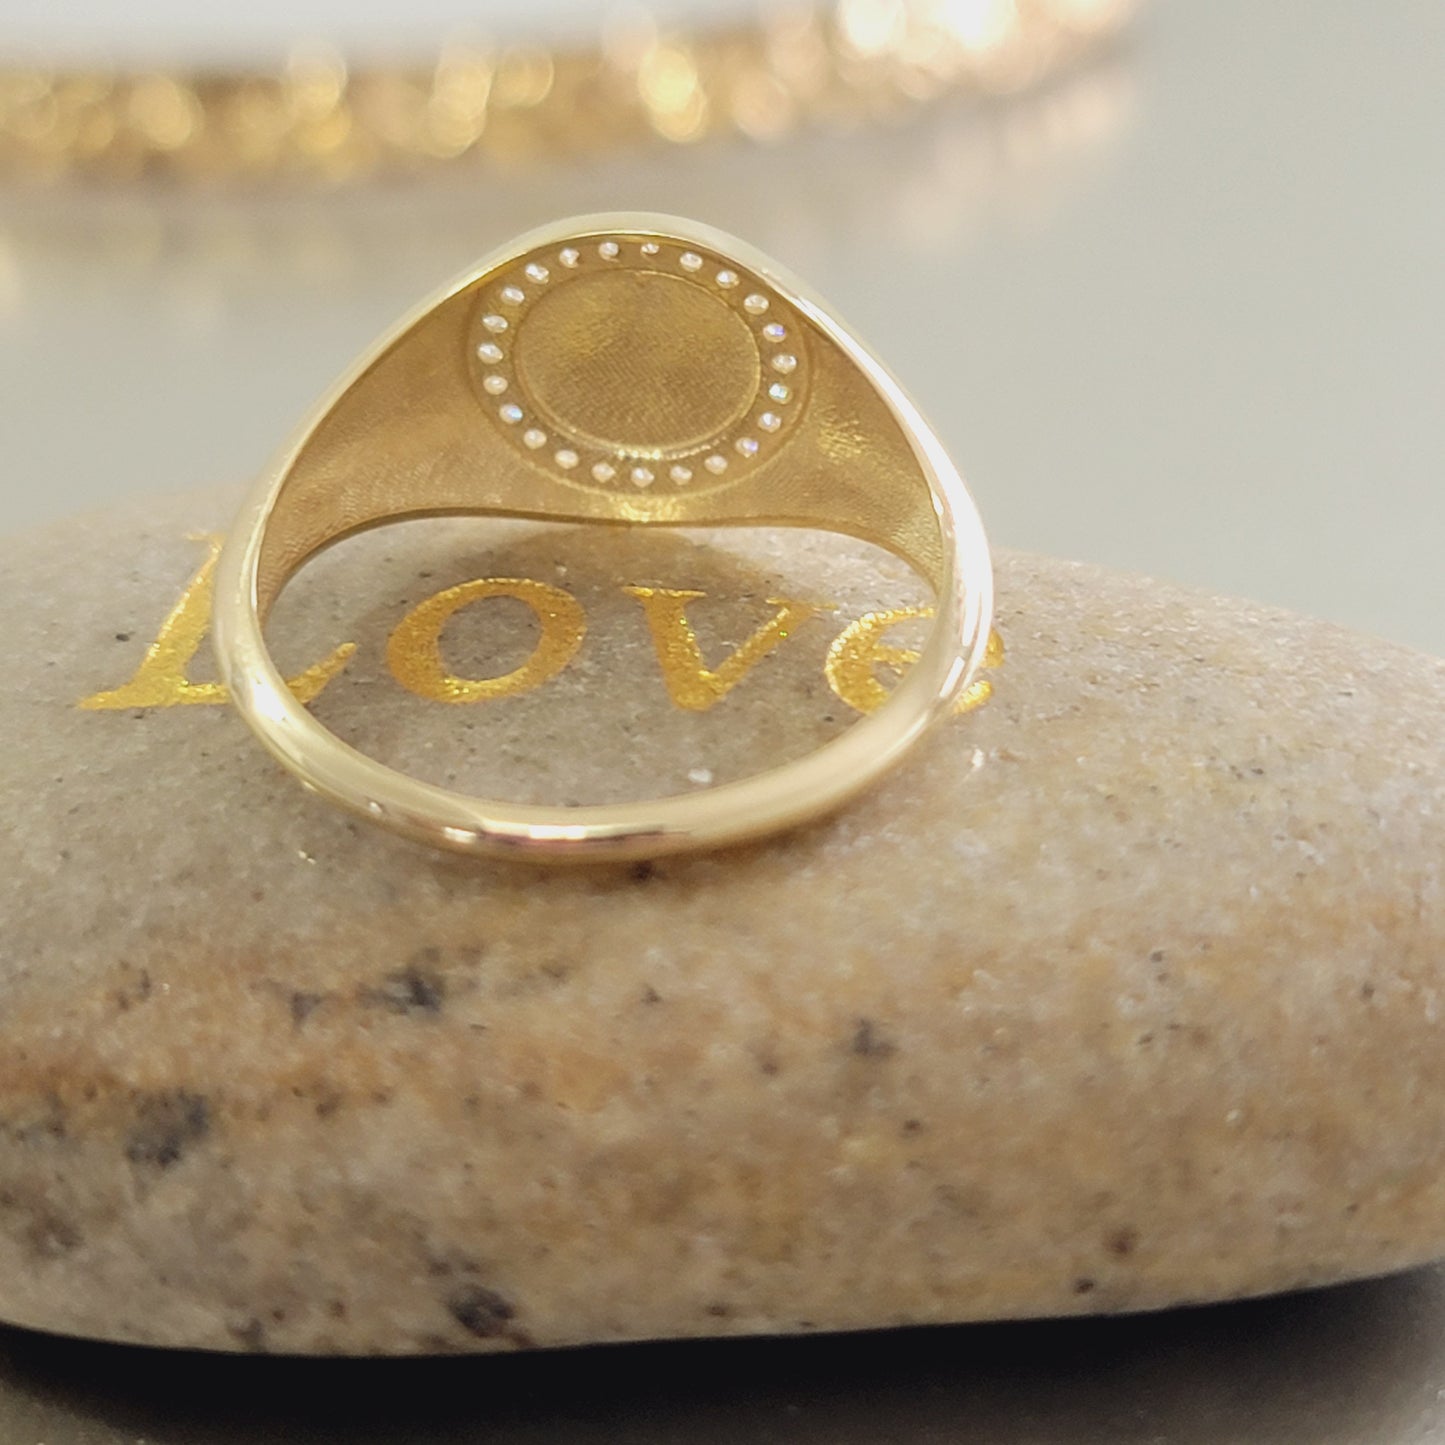 Personalized Diamond Signet Ring in 14k Gold  /Signet Diamond Ring For Women / Initial Ring / Monogram Ring /  Letter Engraved Ring